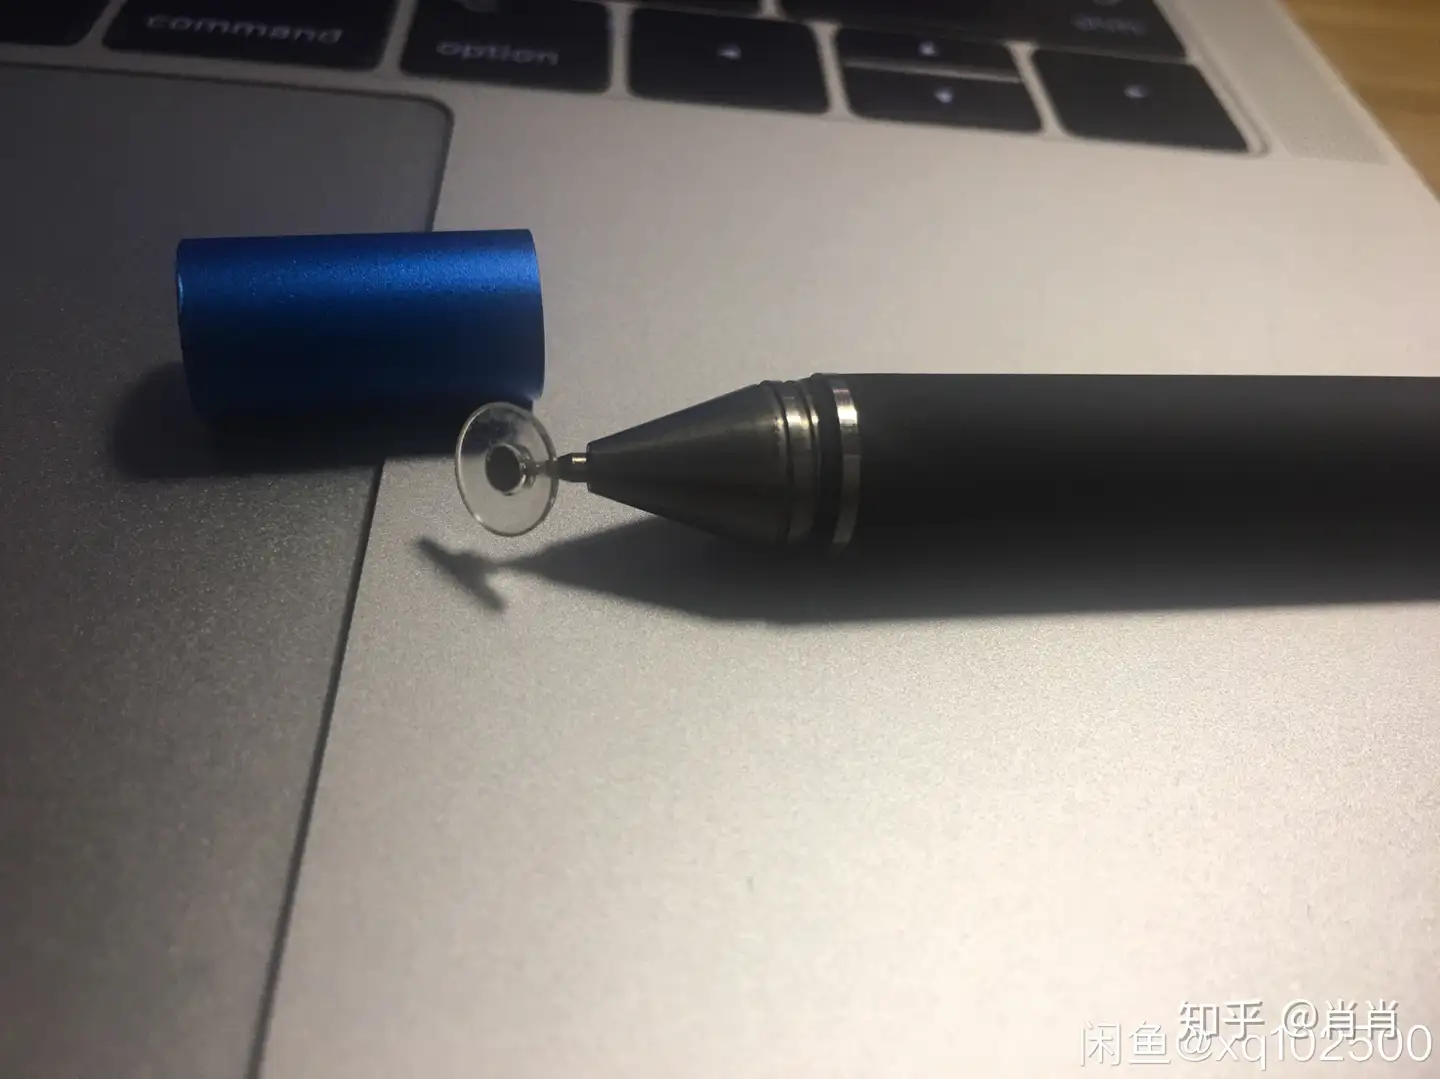 Apple Pencil 的实际体验如何？ - 知乎